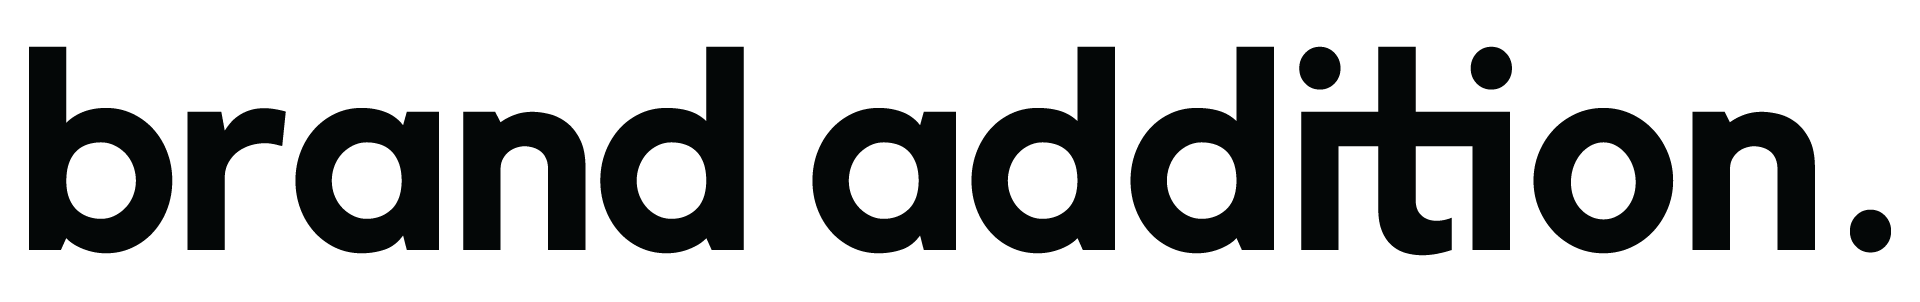 Brand Addition Company Logo